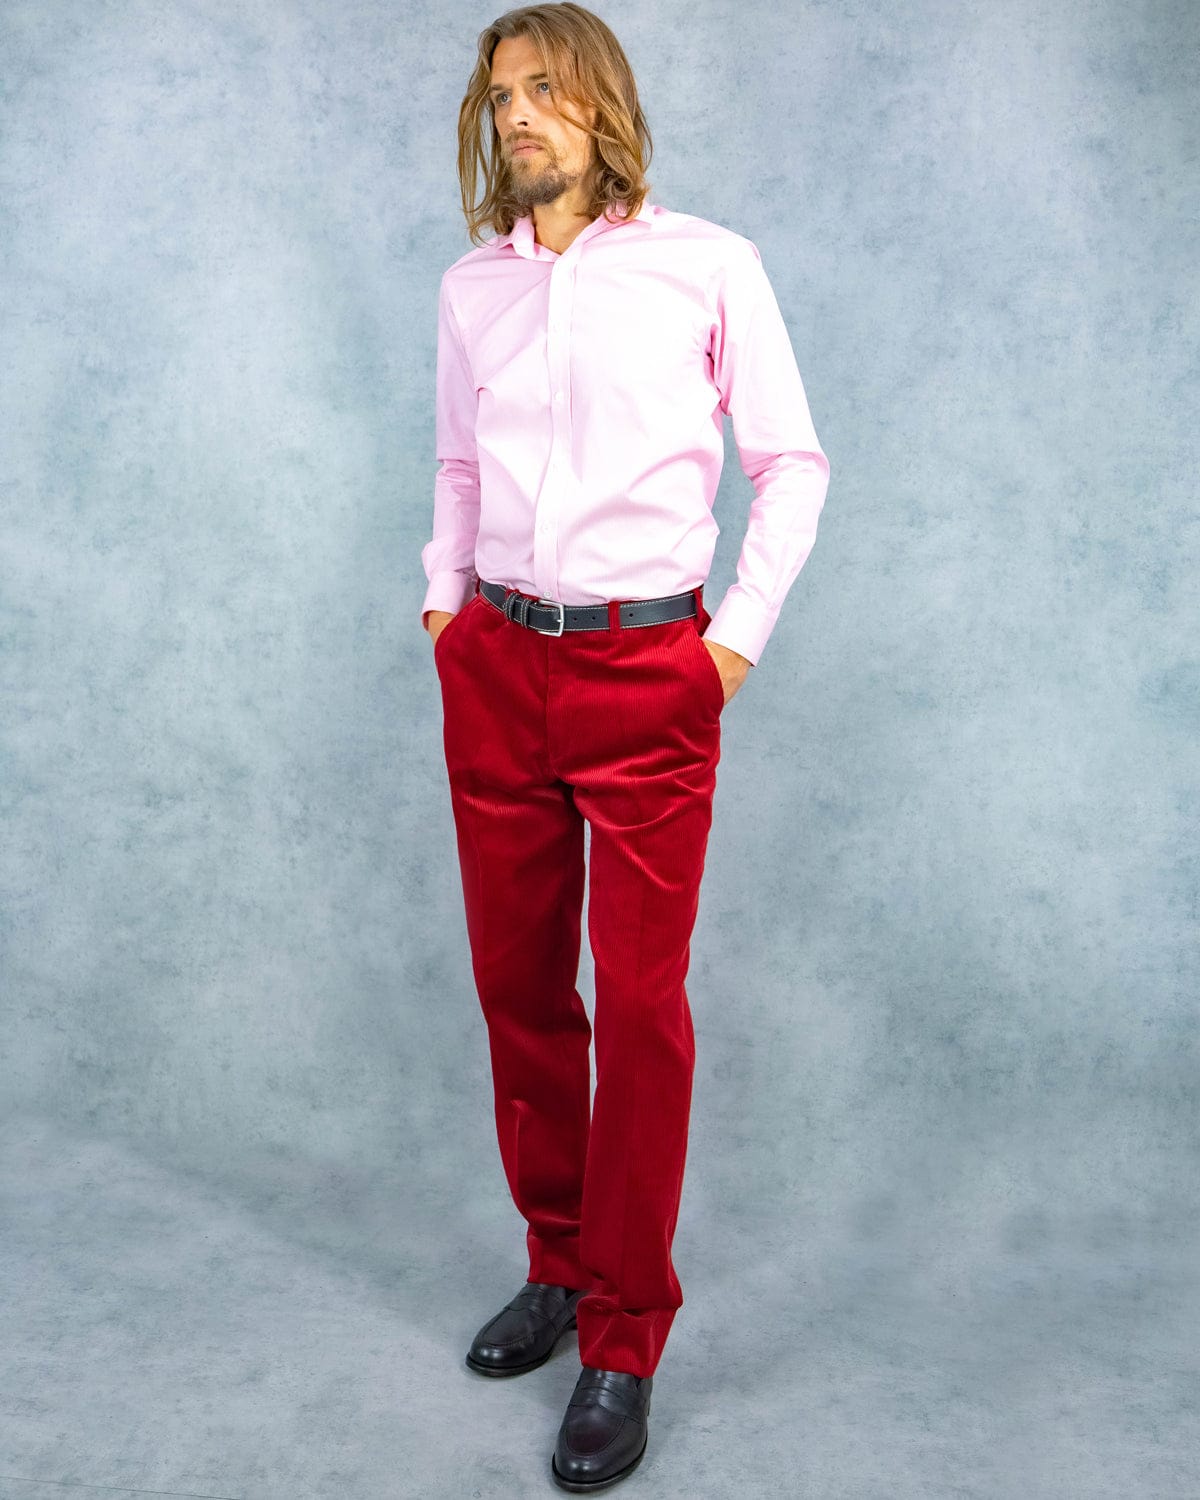 Contemporary Fit, Cut-away Collar, 2 Button Cuff Shirt In Pink & White Stripe - Hilditch & Key